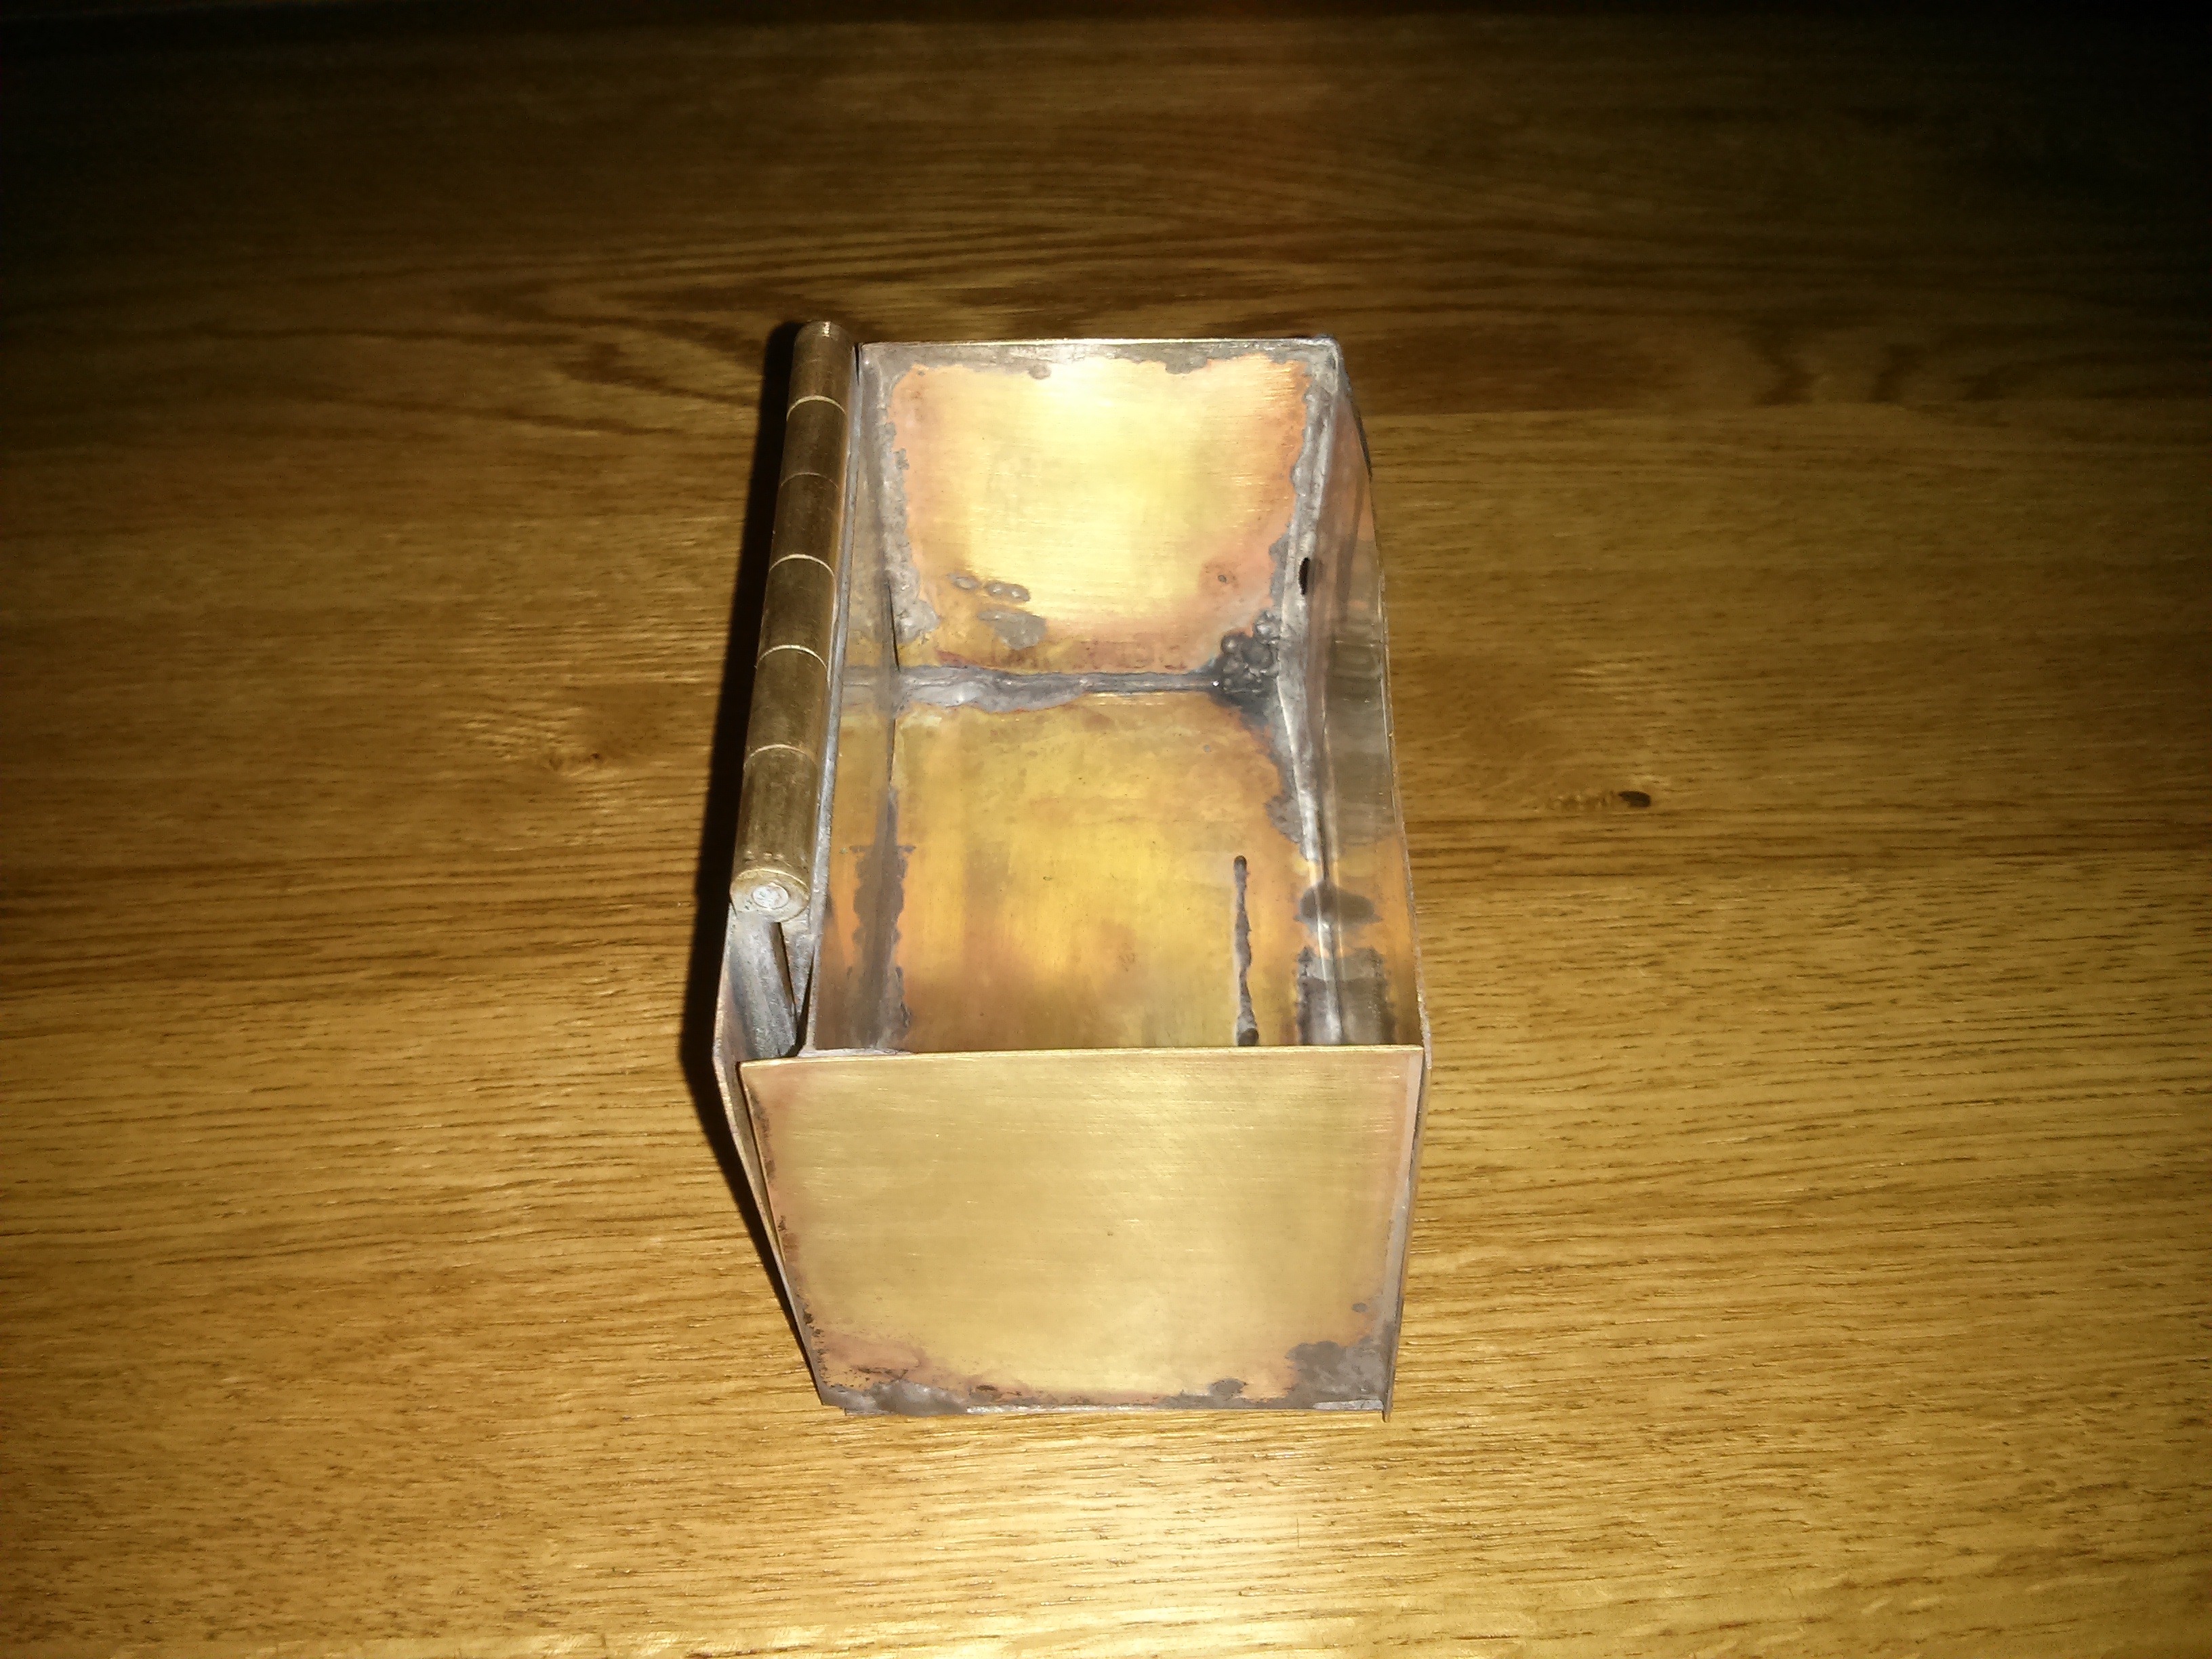 James Stanley - I made a brass box